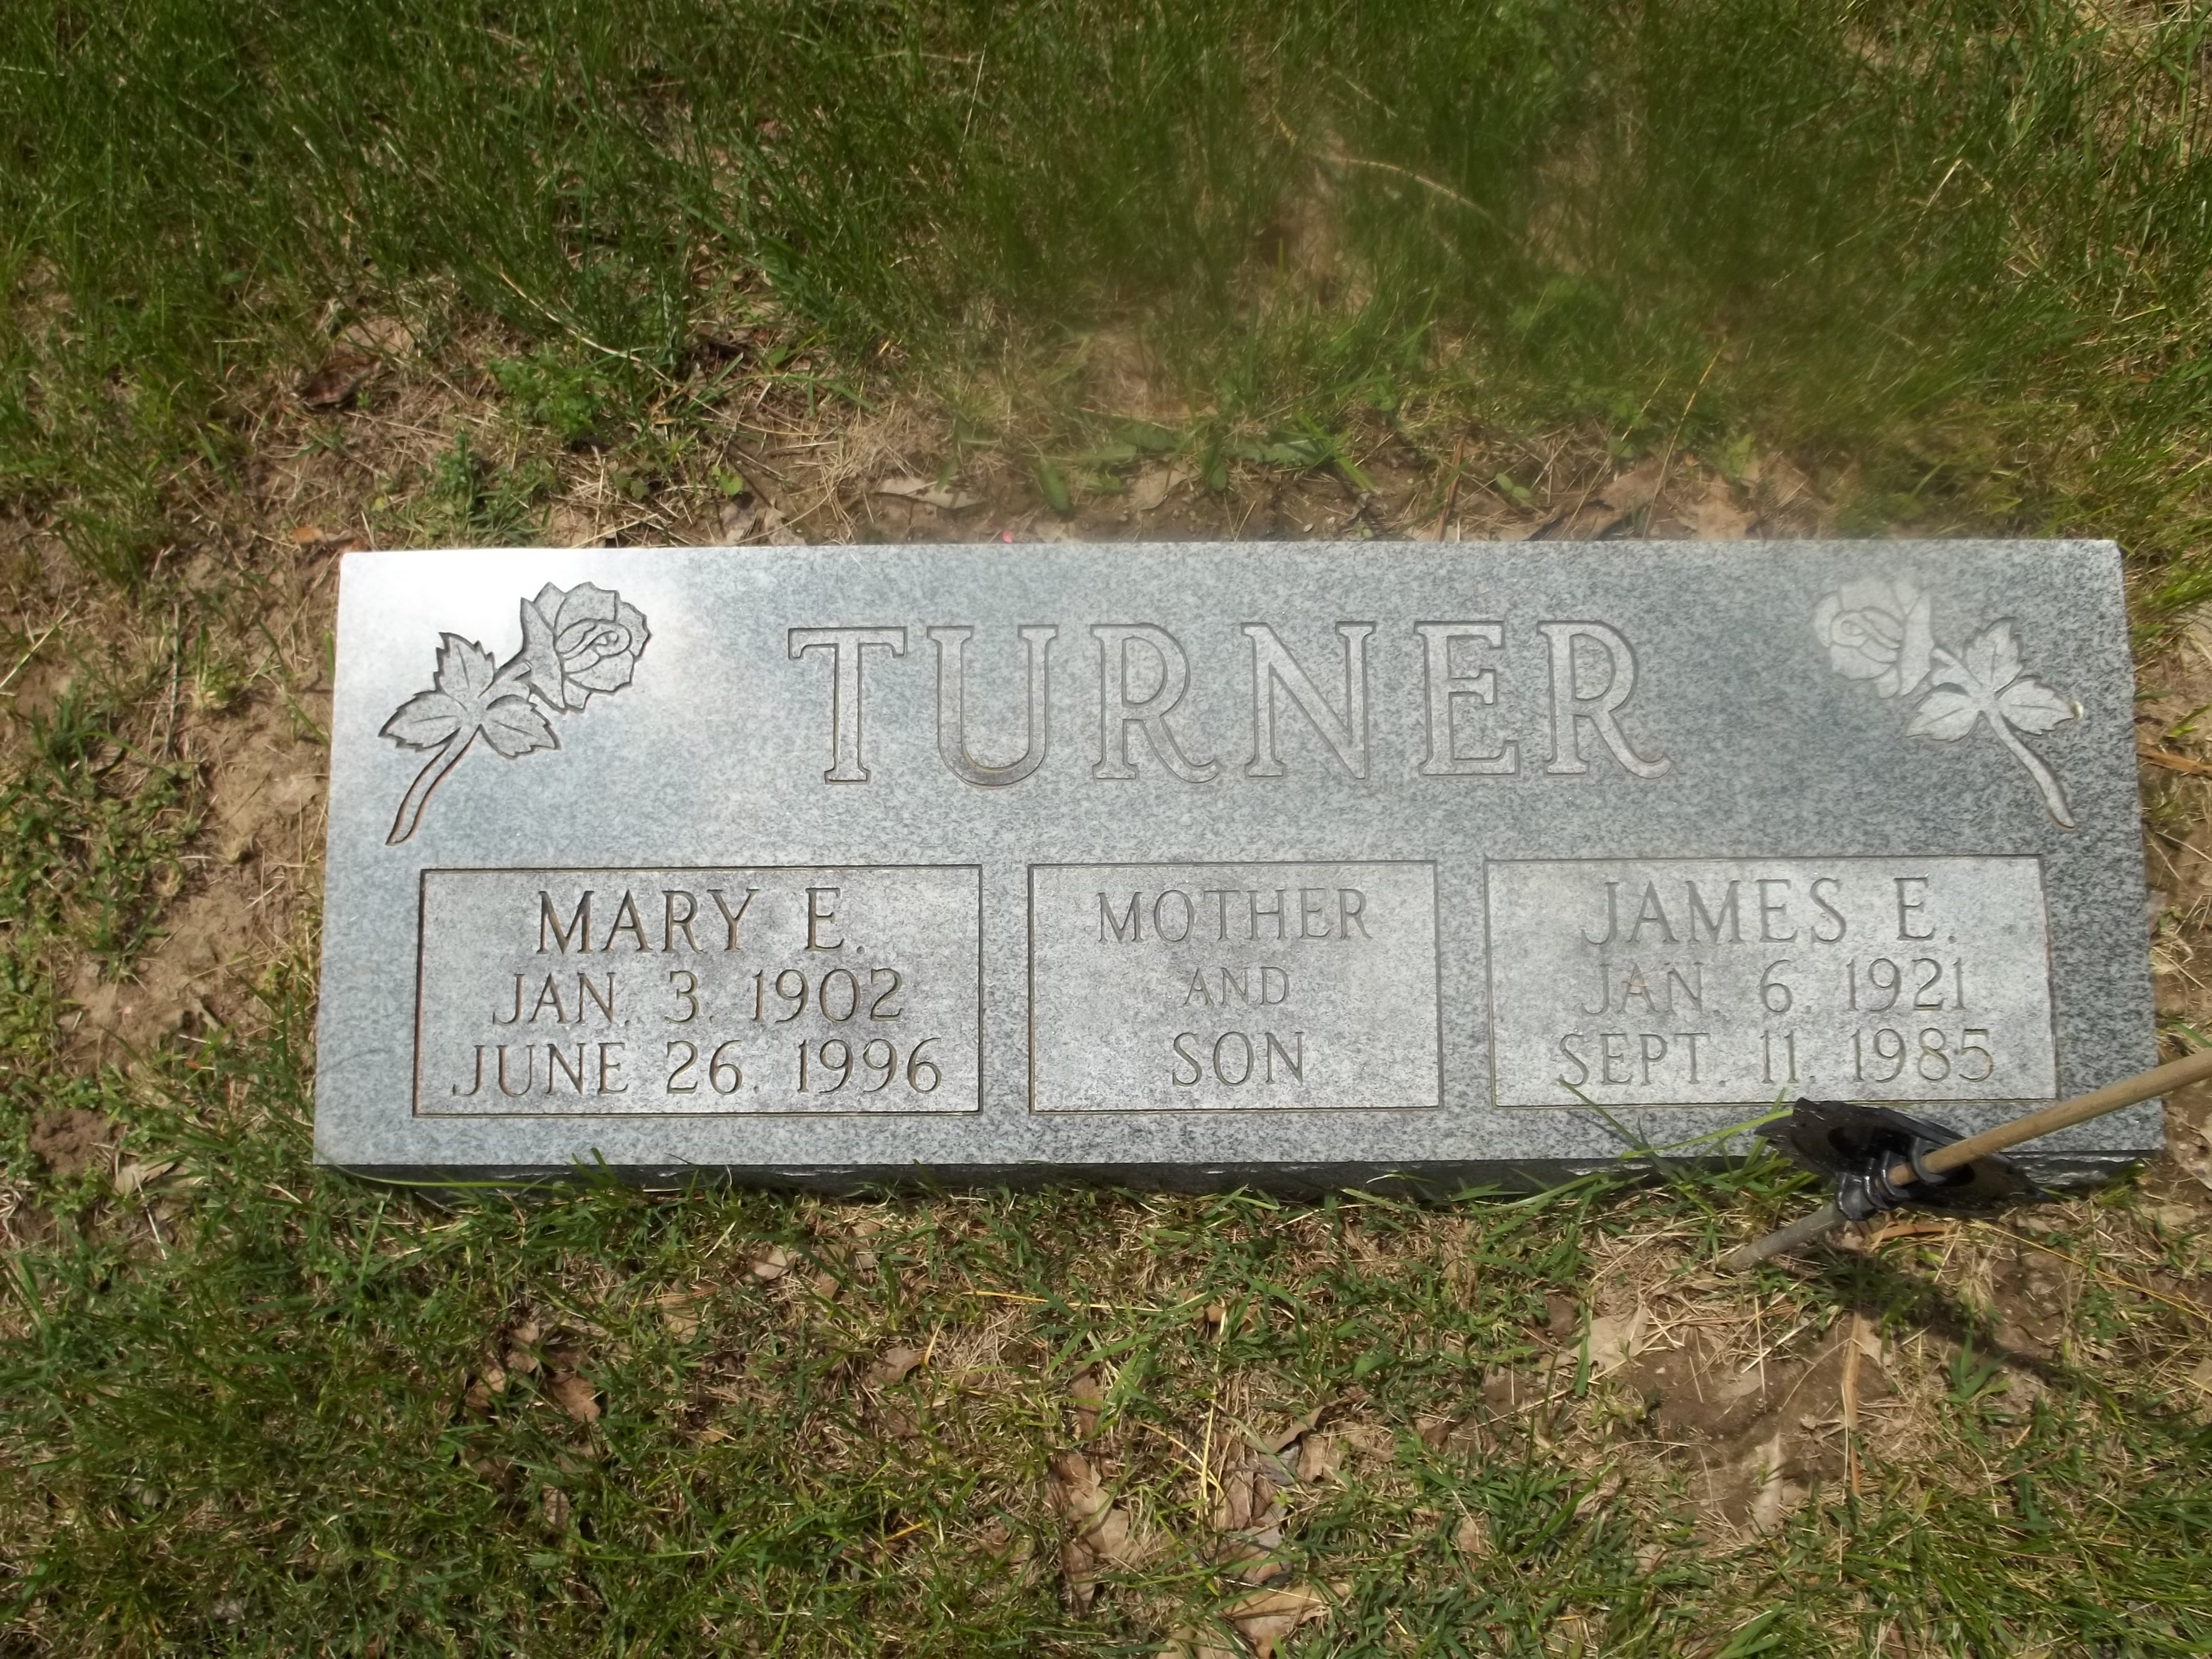 James E. and Mary E. Turner Headstone